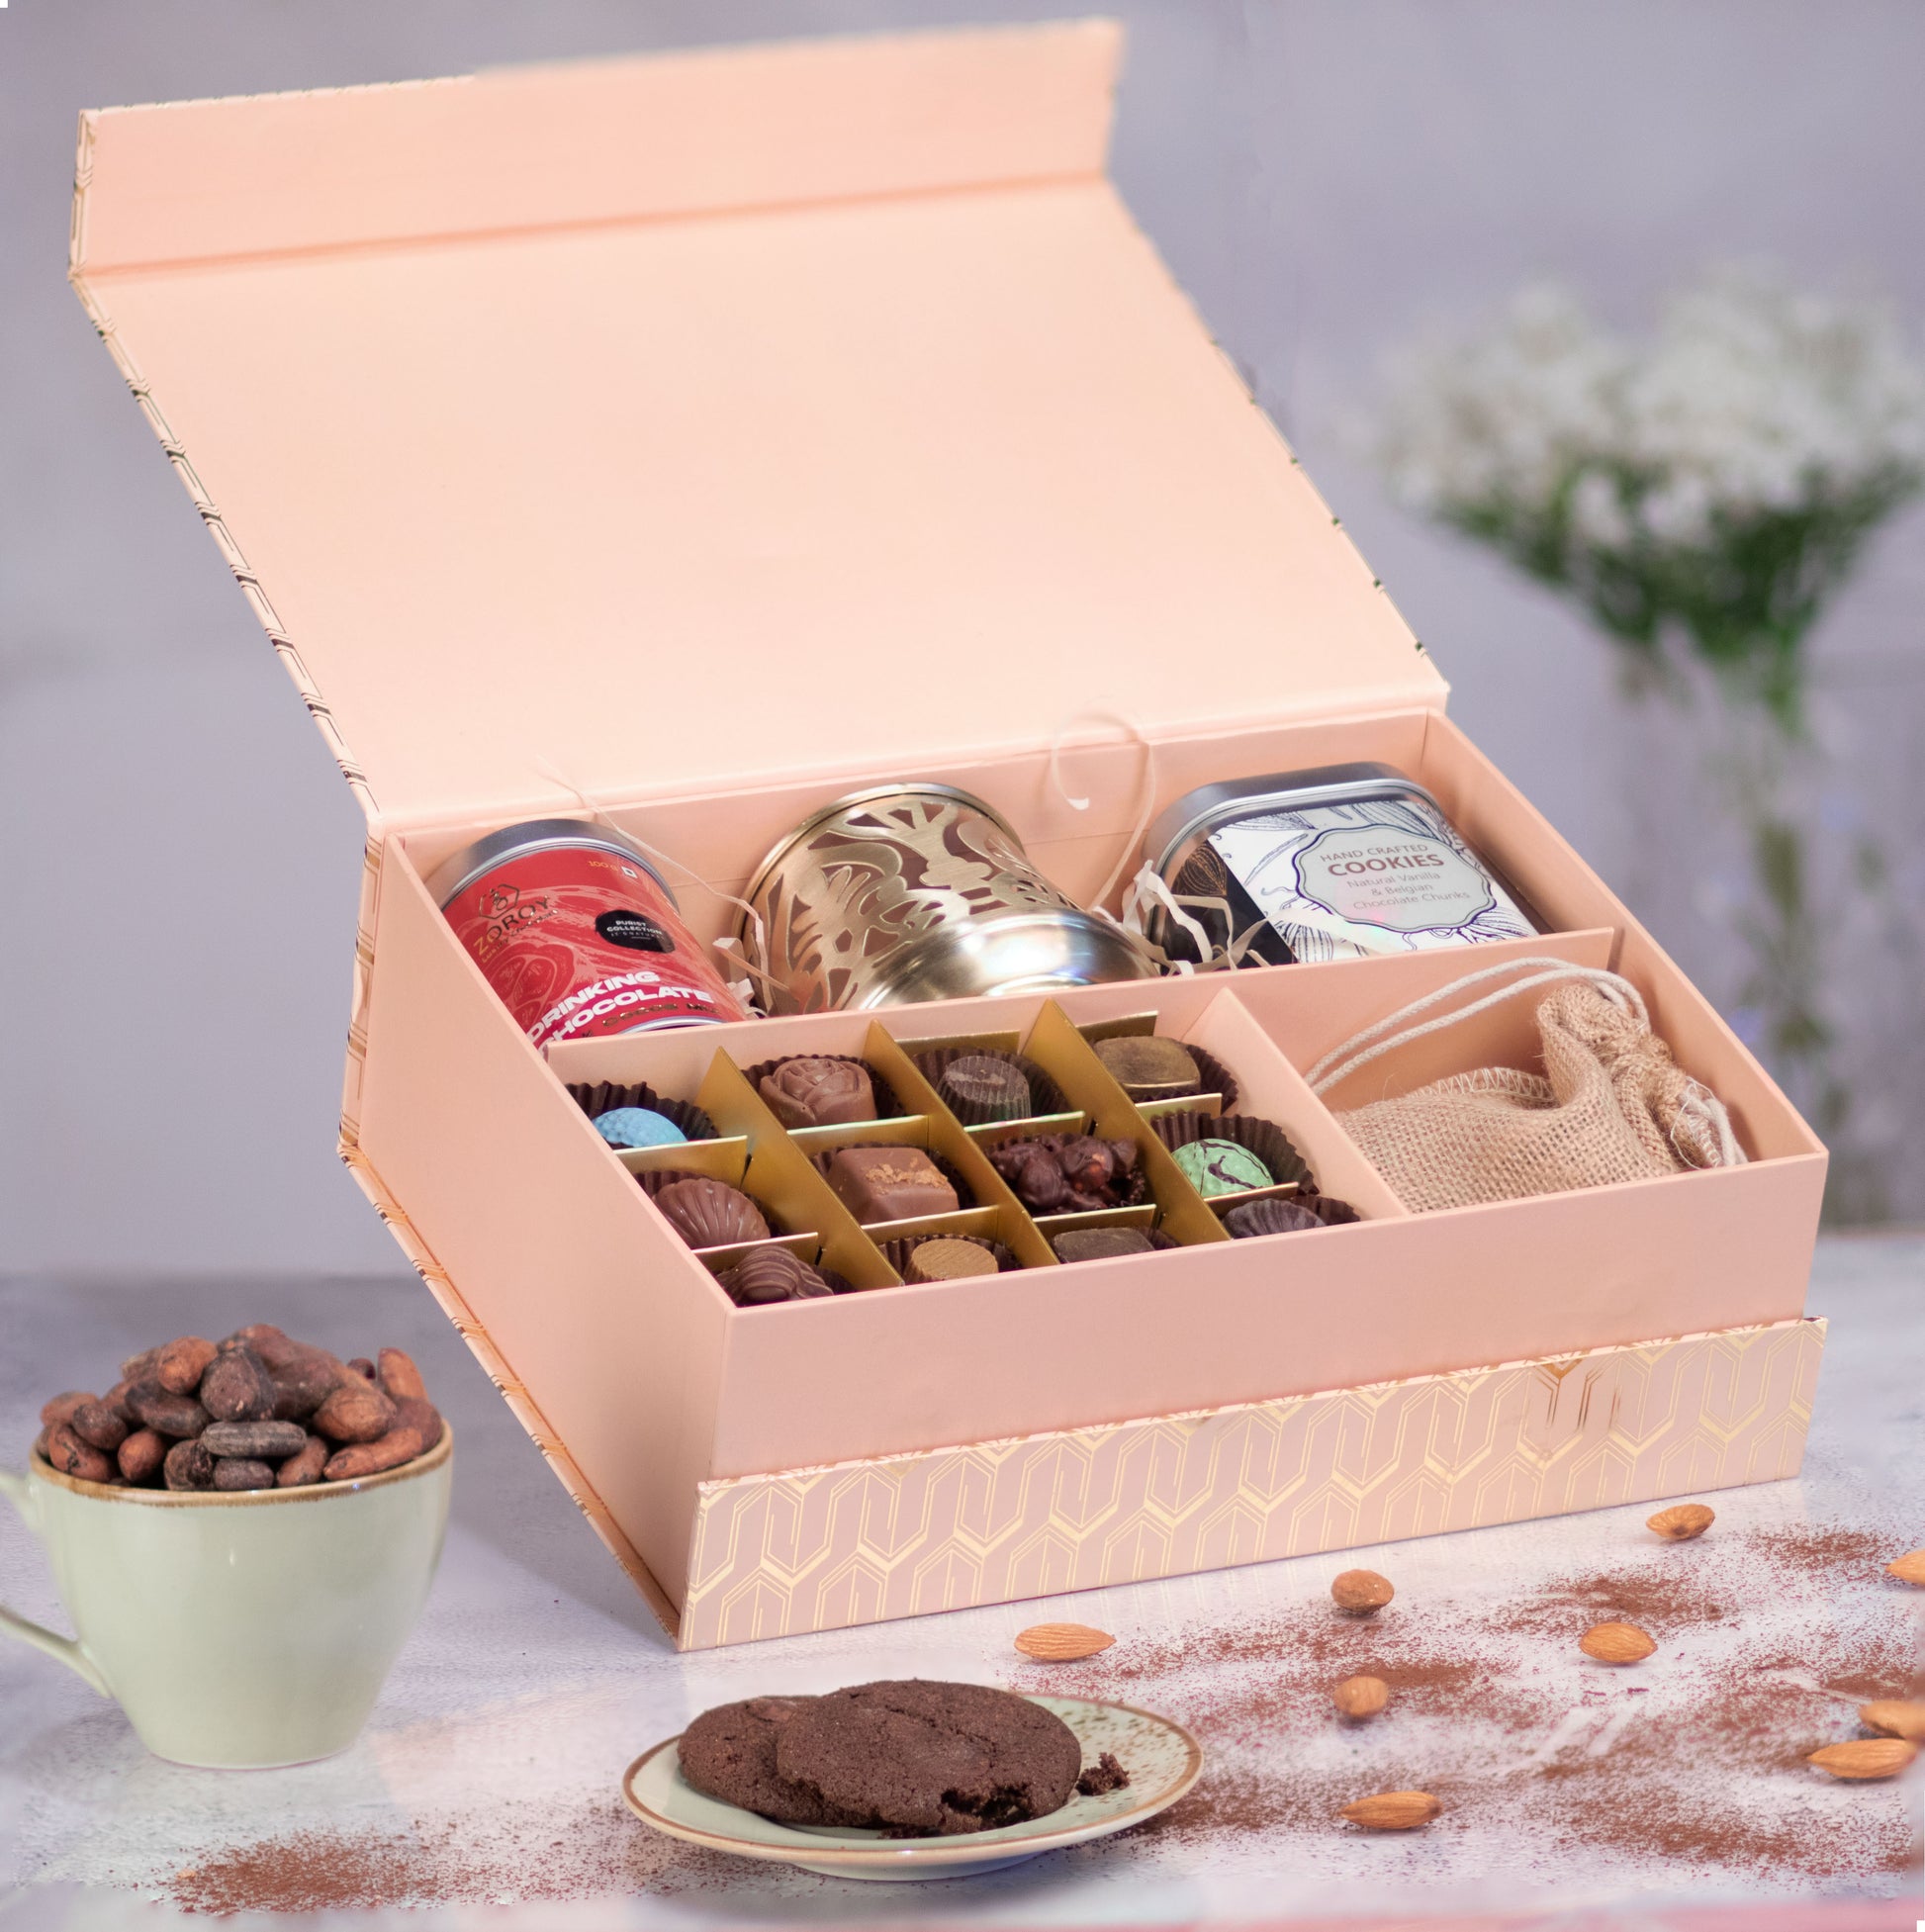 ZOROY Luxury Chocolate Prominence Gift Hamper For Diwali Corporate Festive Birthday Weeding Christmas | Dry fruits | Metal T-lite Holder | Chocolates | Drinking chocolate | Aroma Diffuser | 100% Veg